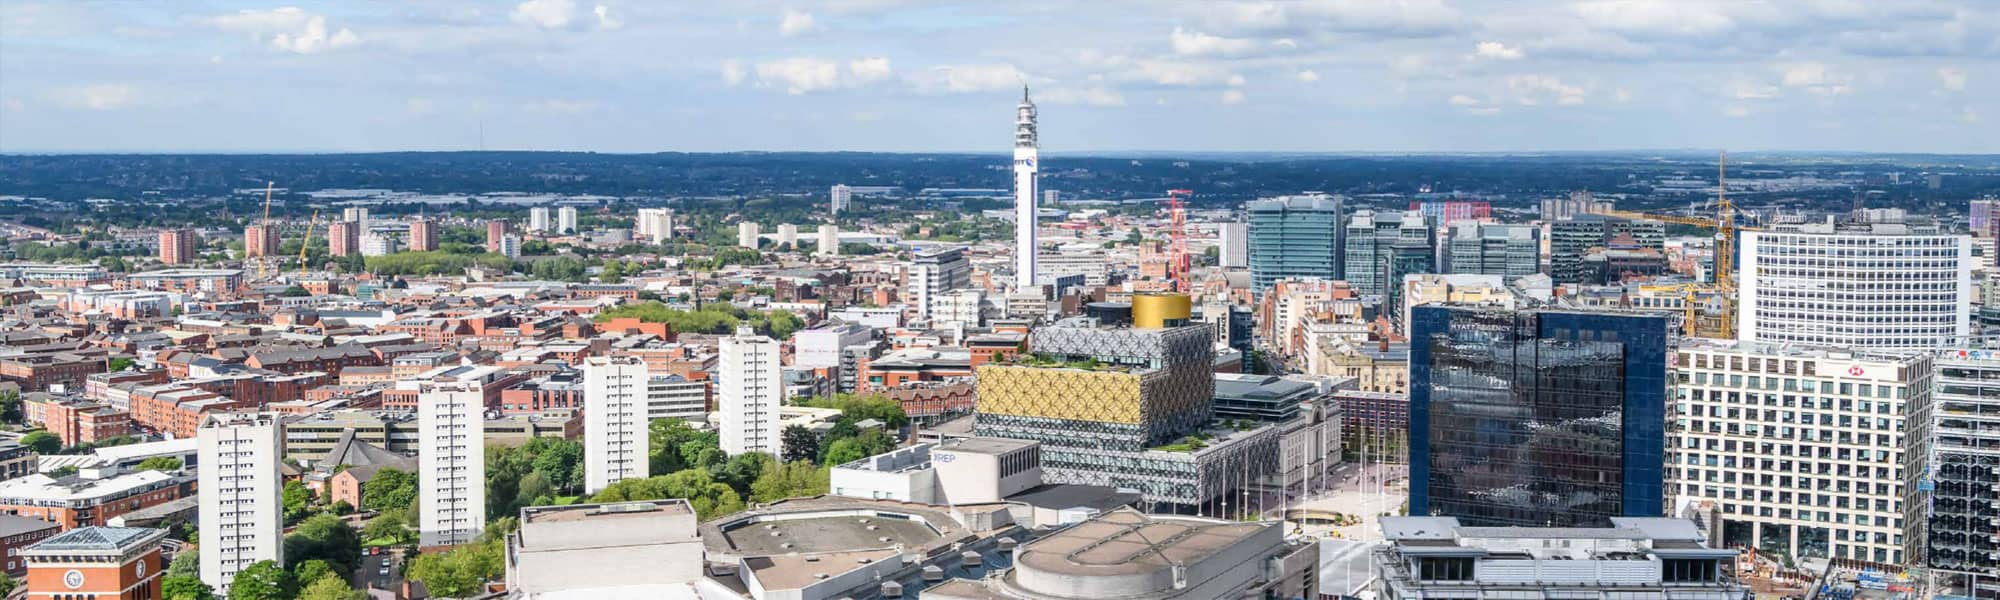 Aerial shot of Birmingham city centre